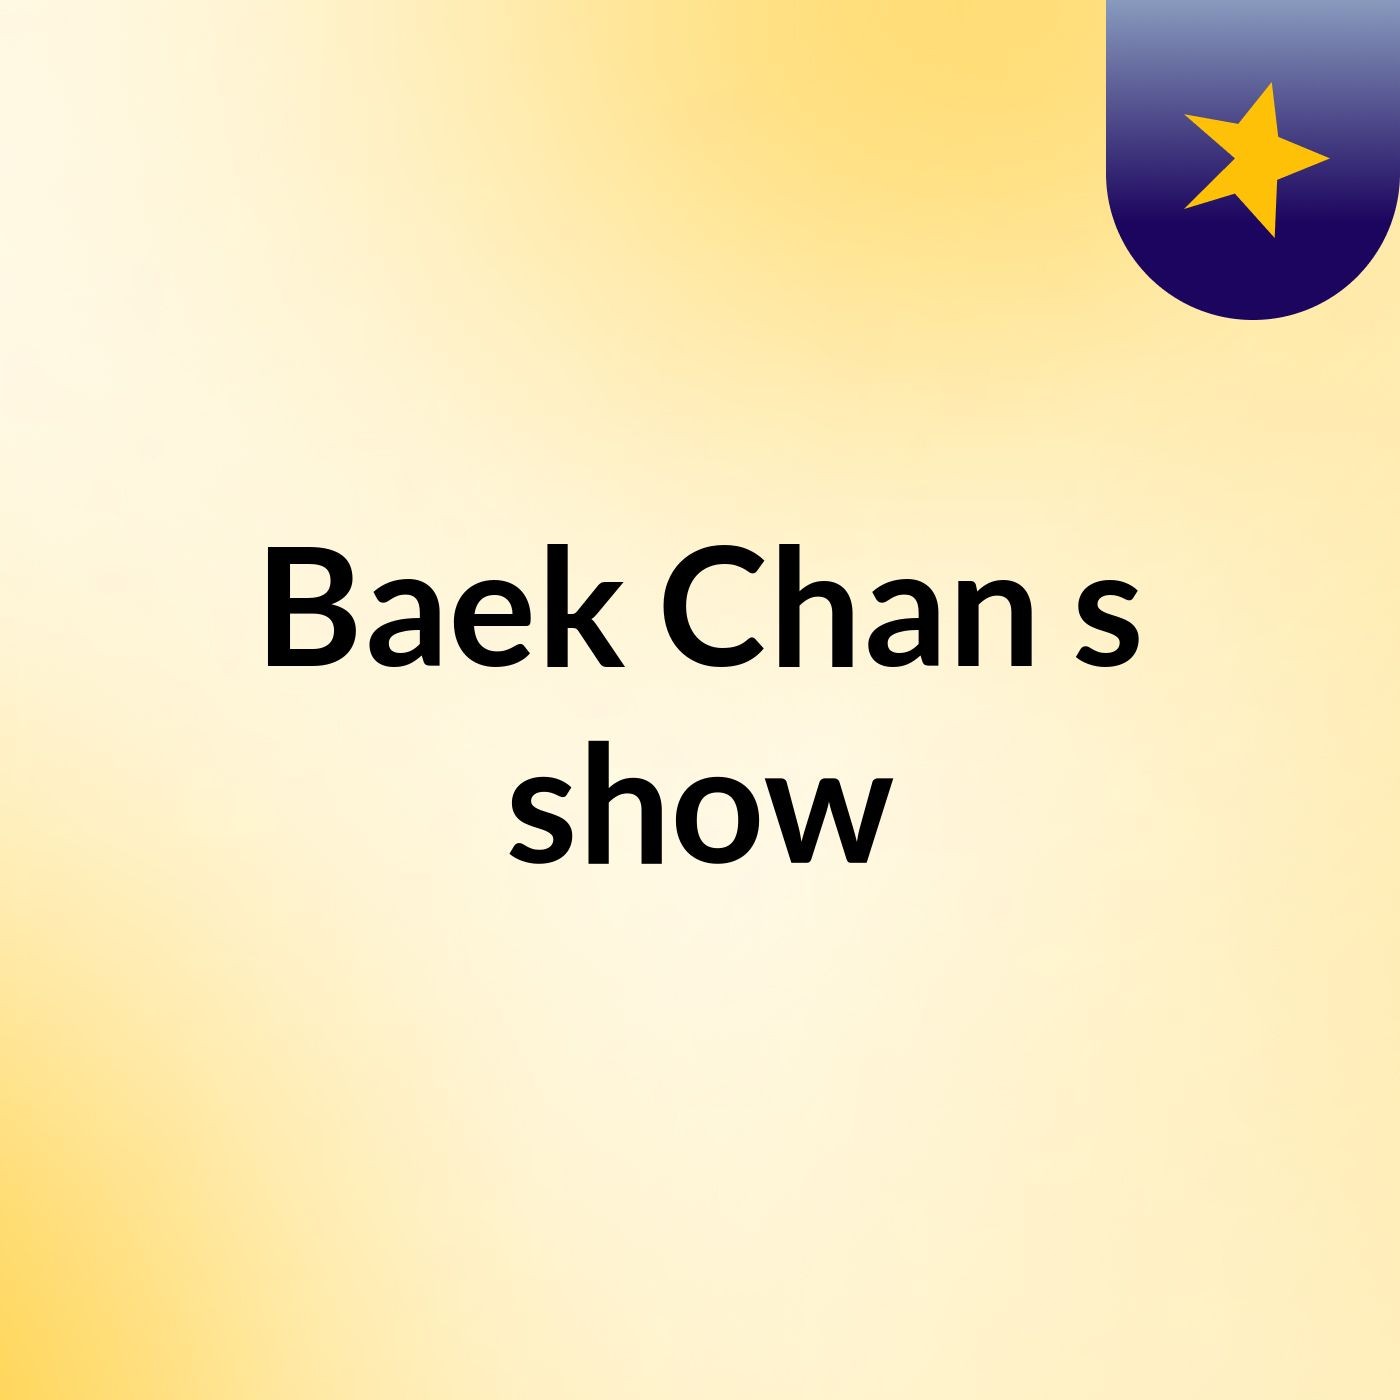 Baek Chan's show